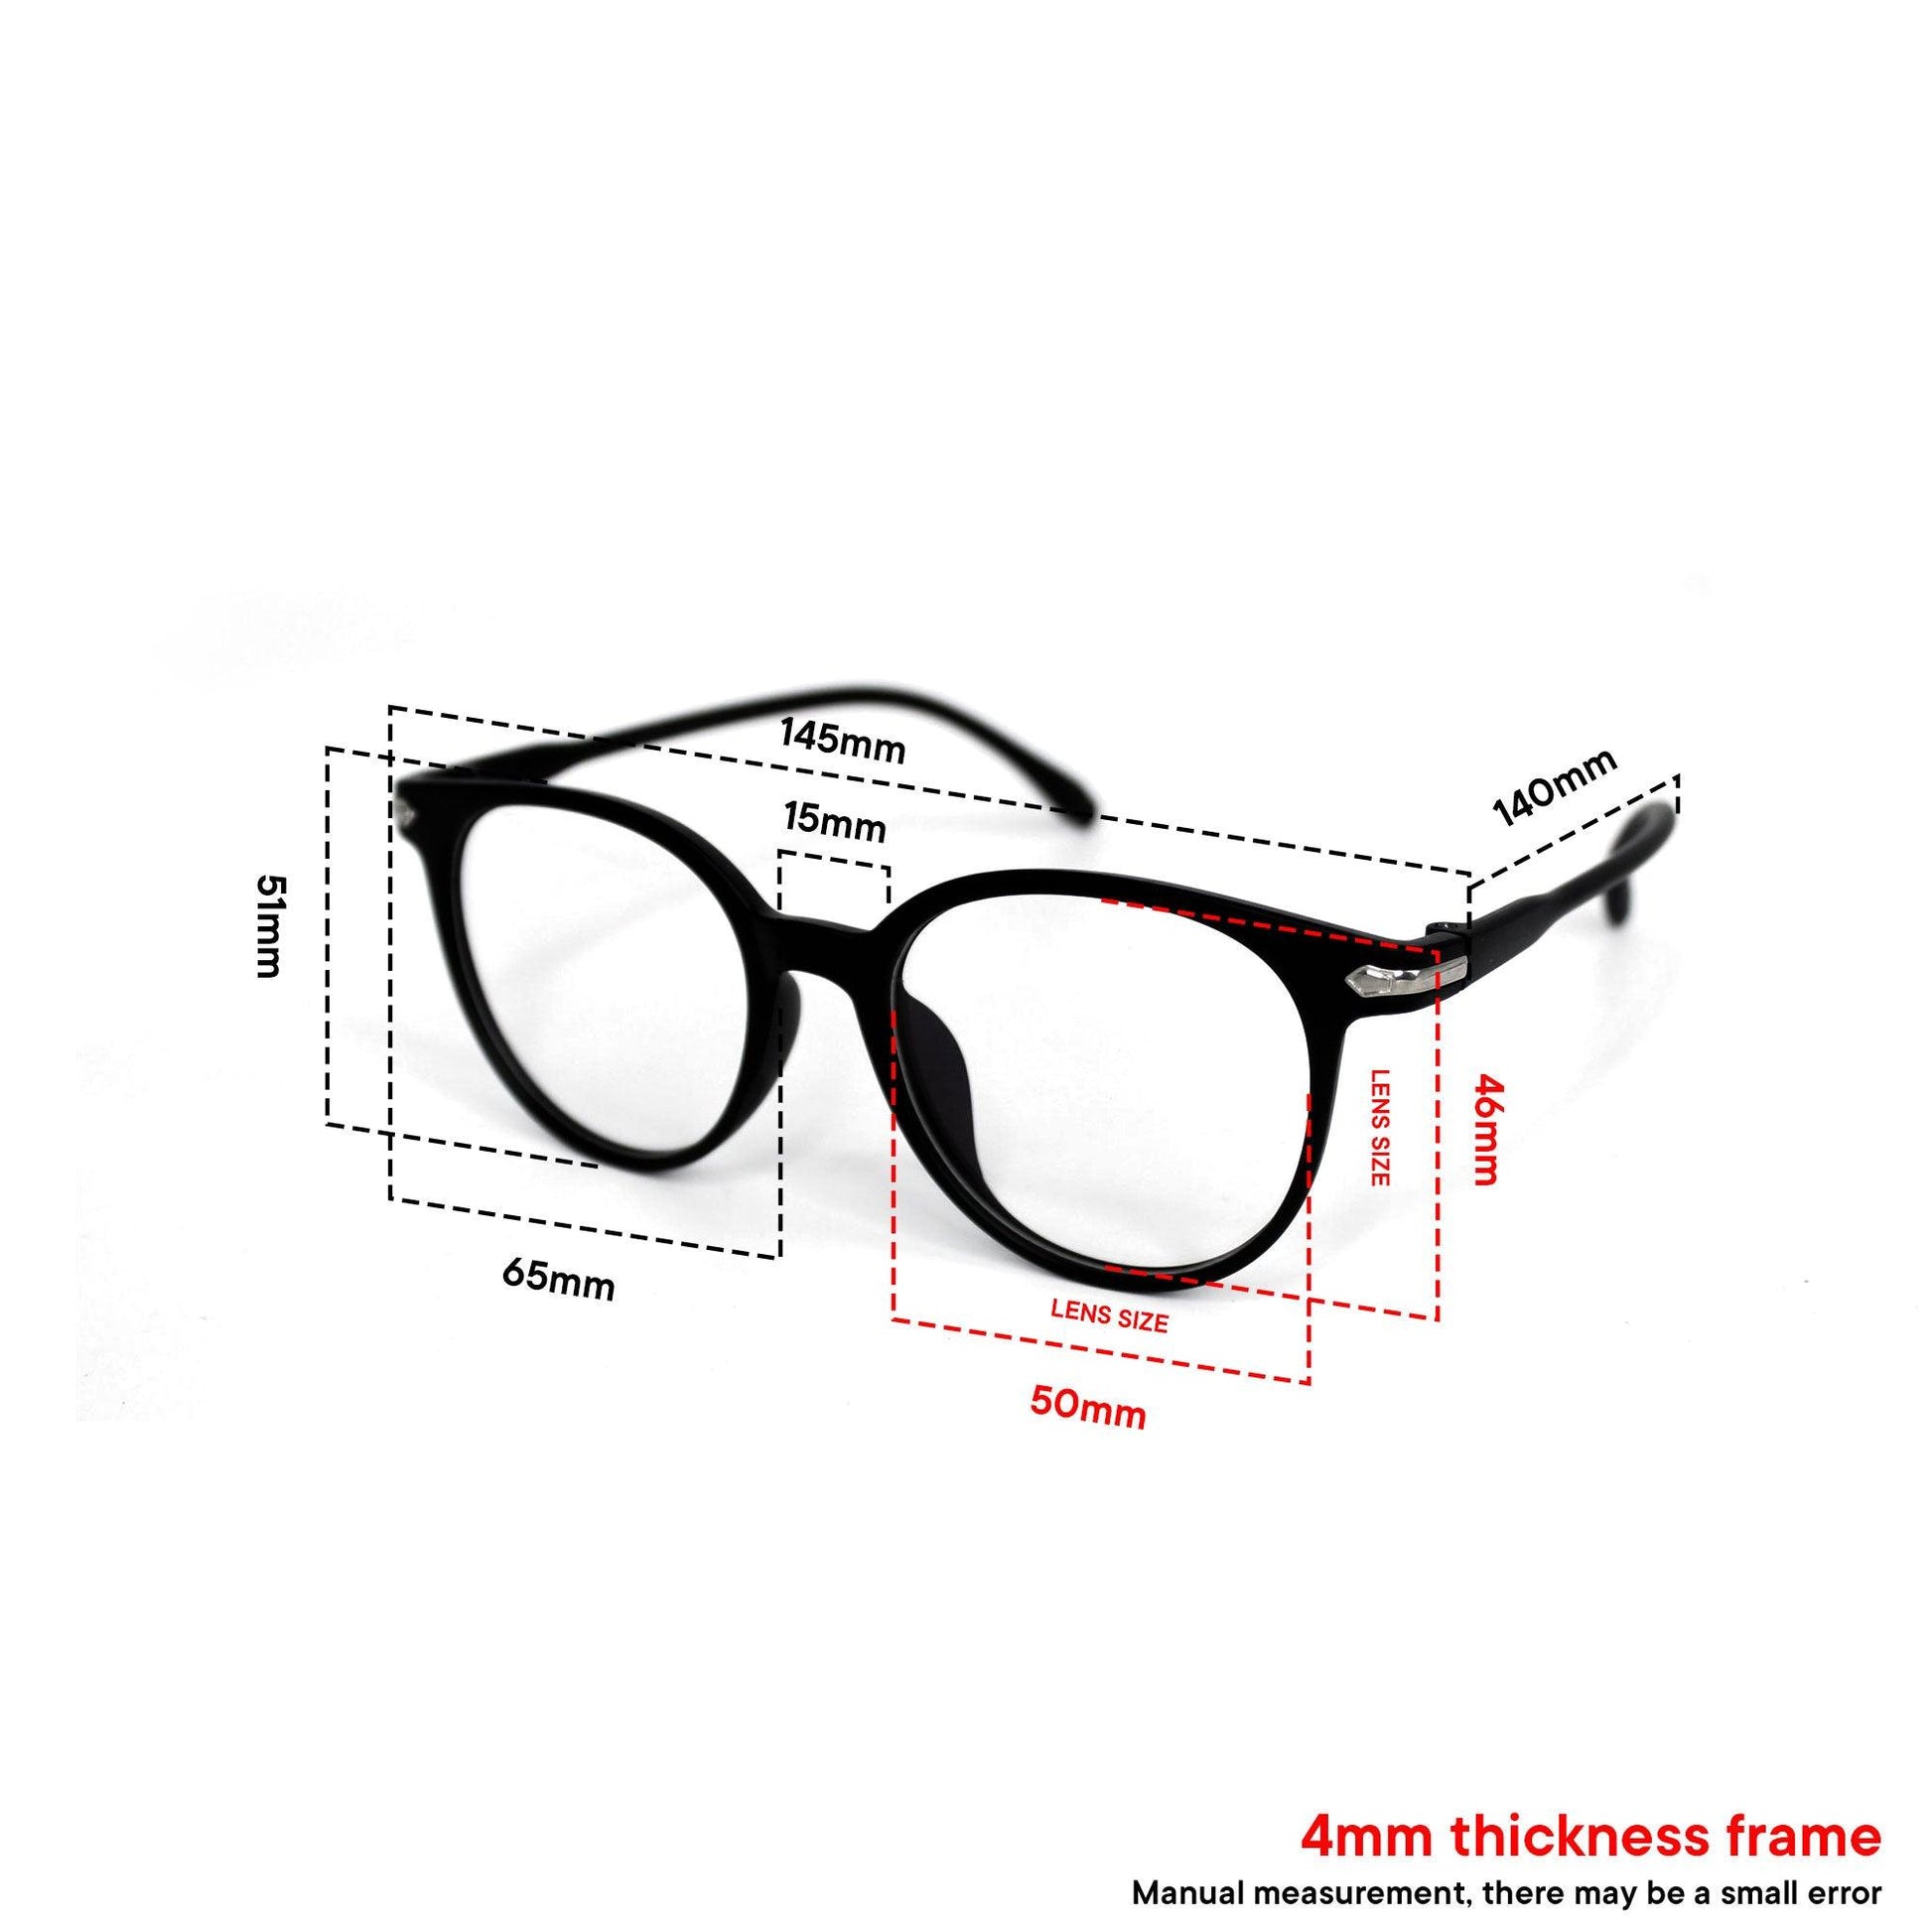 Peculiar ANDY Round TRANSPINK Polycarbonate Frame Peculiar Photochromic TransitionPRO Lens - peculiareyewear